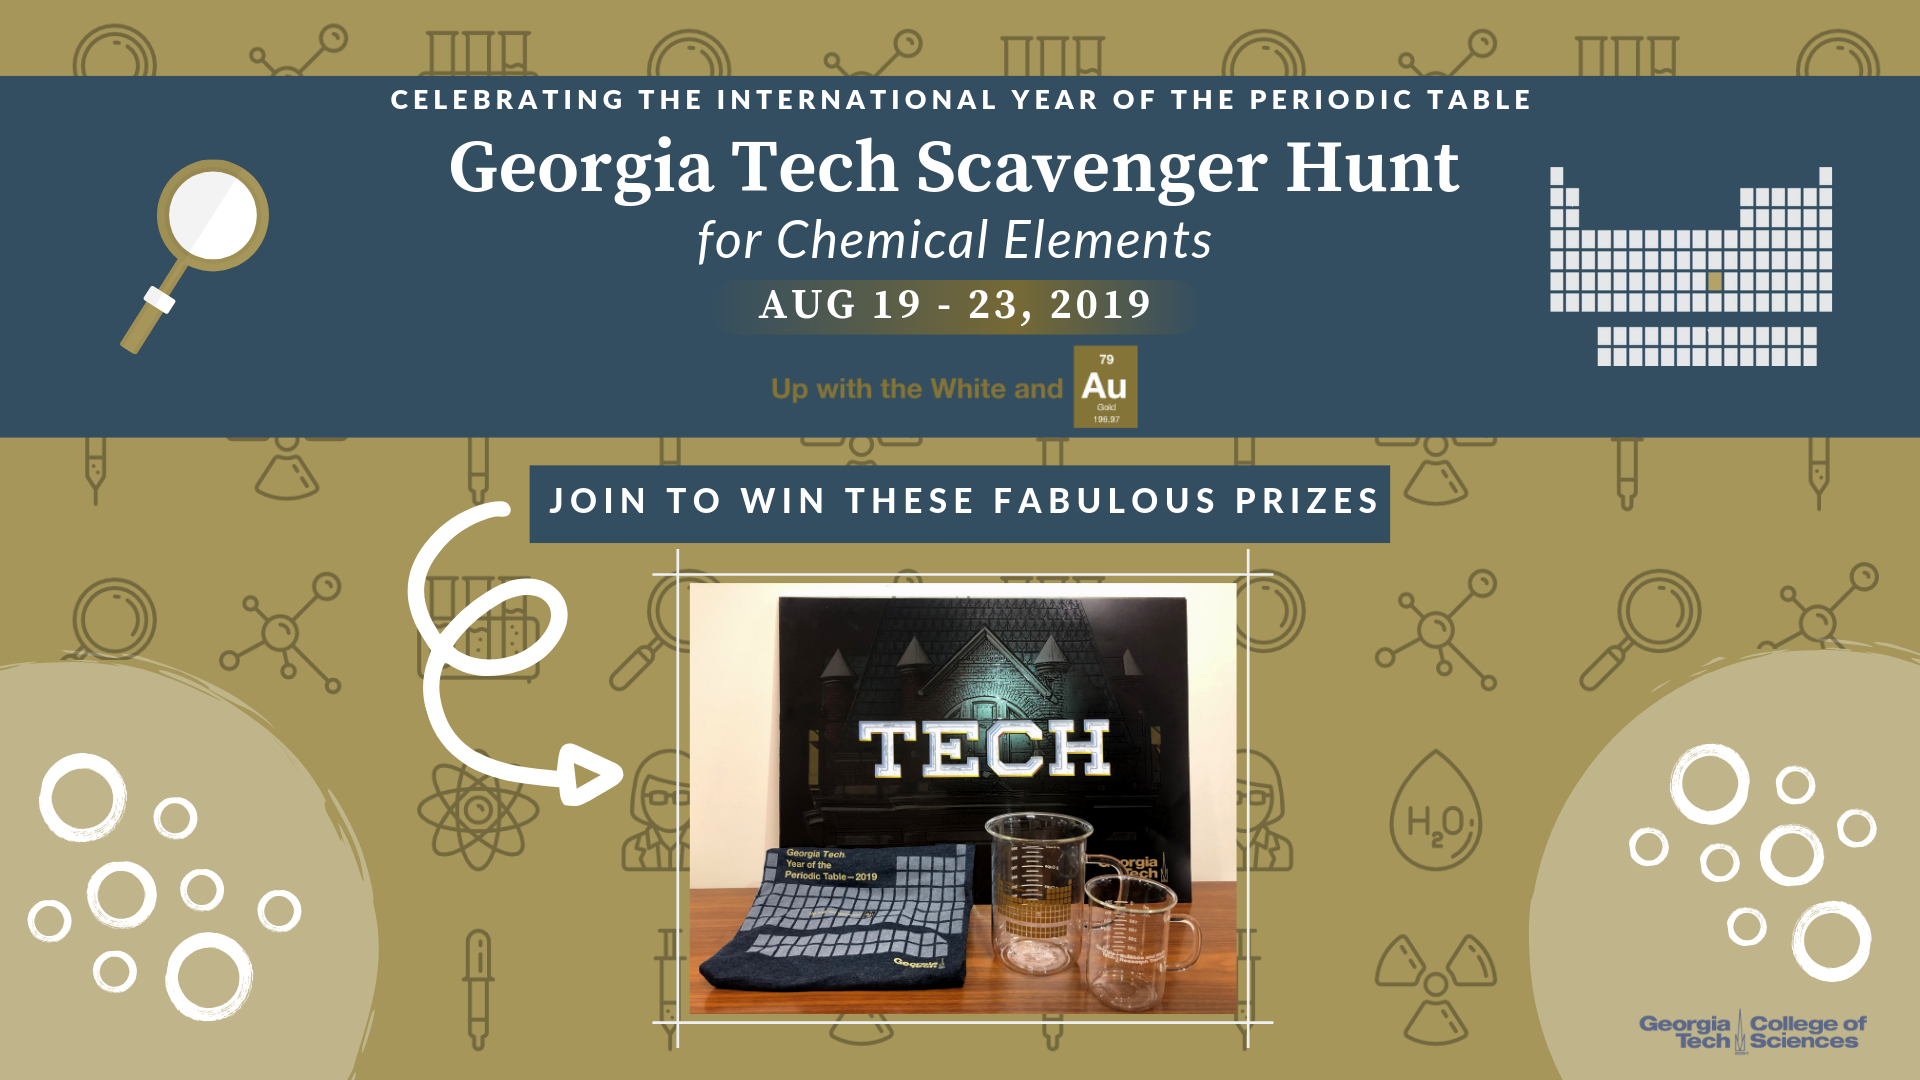 Georgia Tech posters, beaker mugs, and T-shirts await successful scavenger hunters